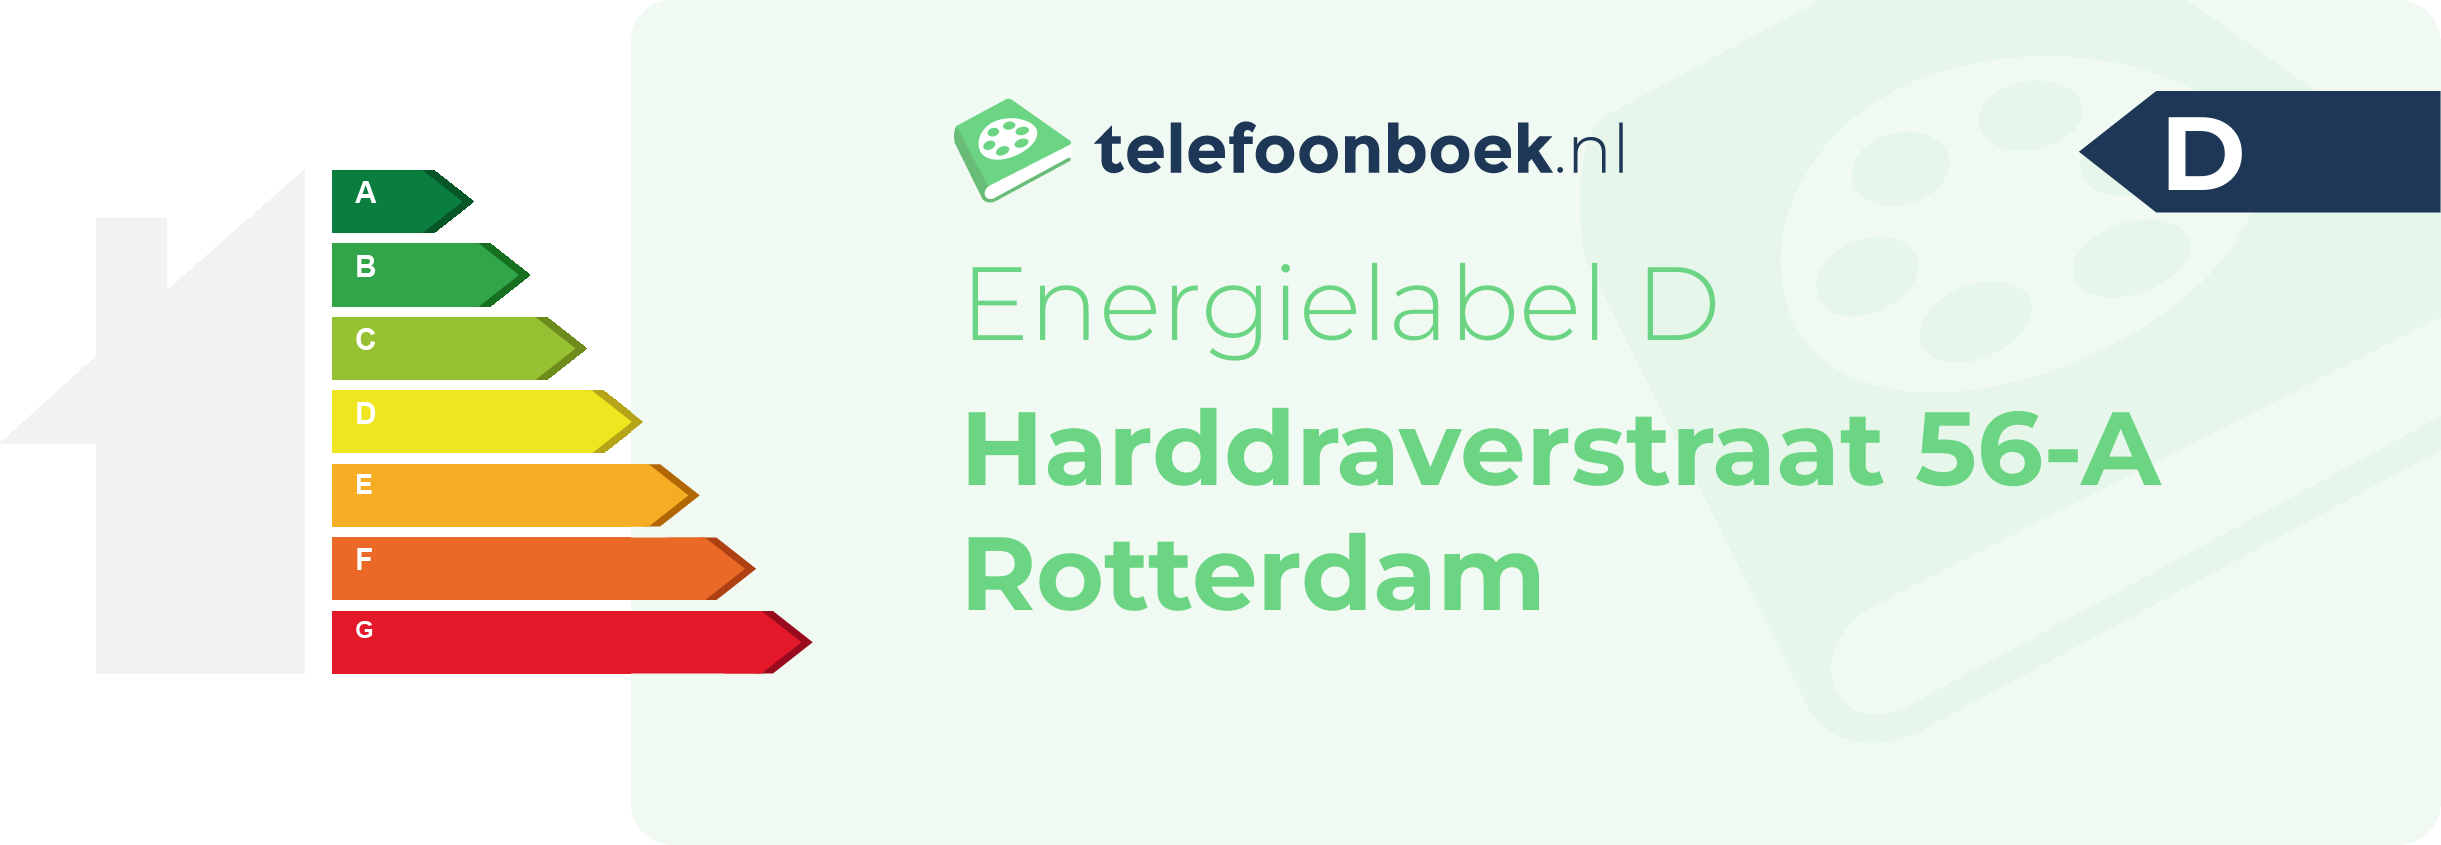 Energielabel Harddraverstraat 56-A Rotterdam